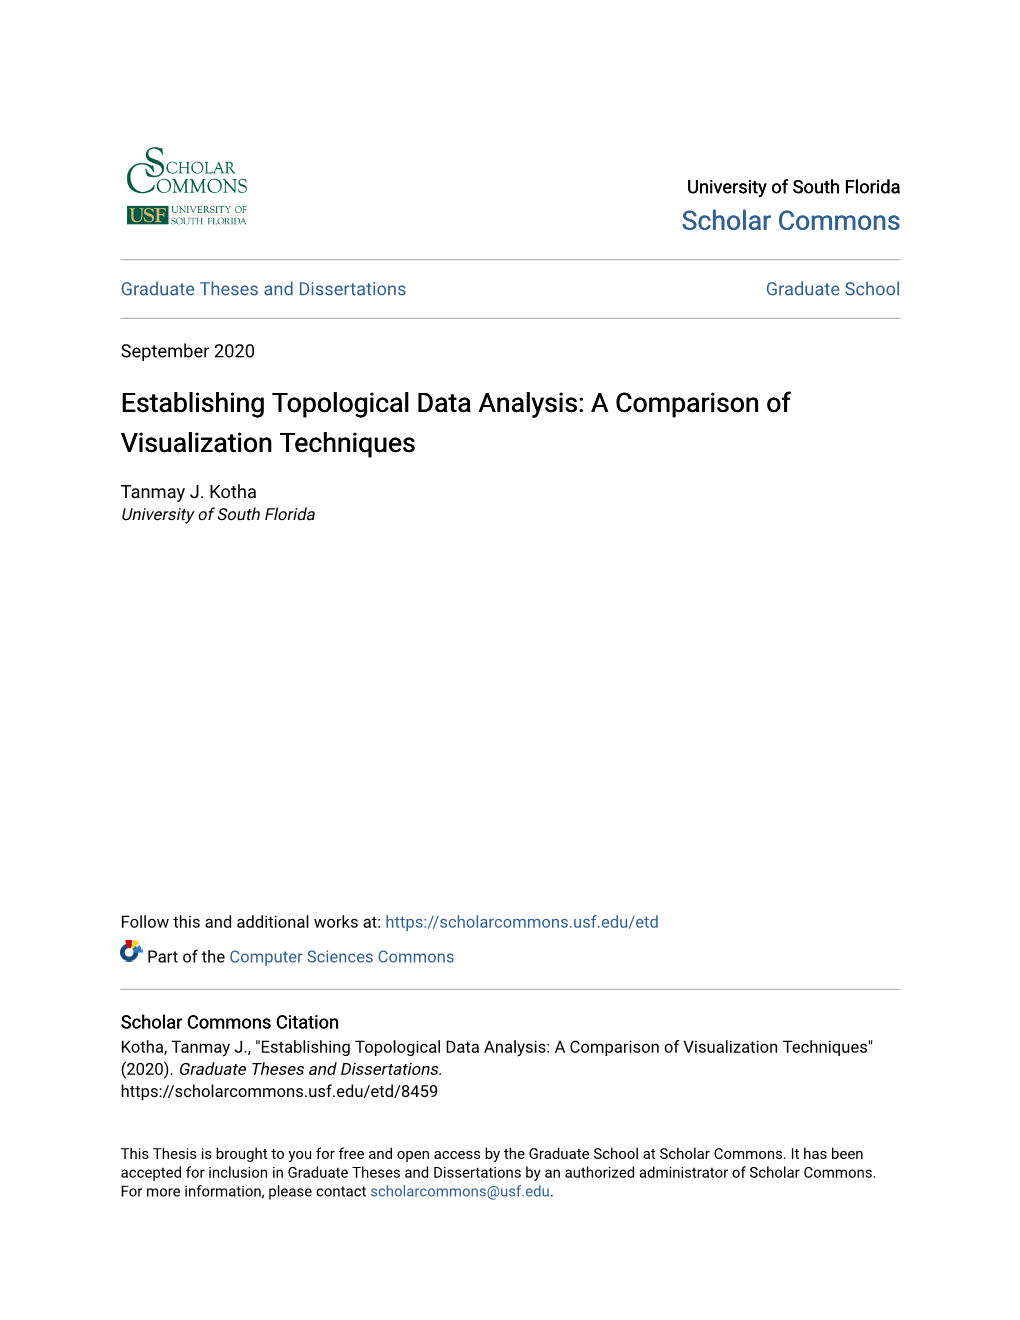 Establishing Topological Data Analysis: a Comparison of Visualization Techniques